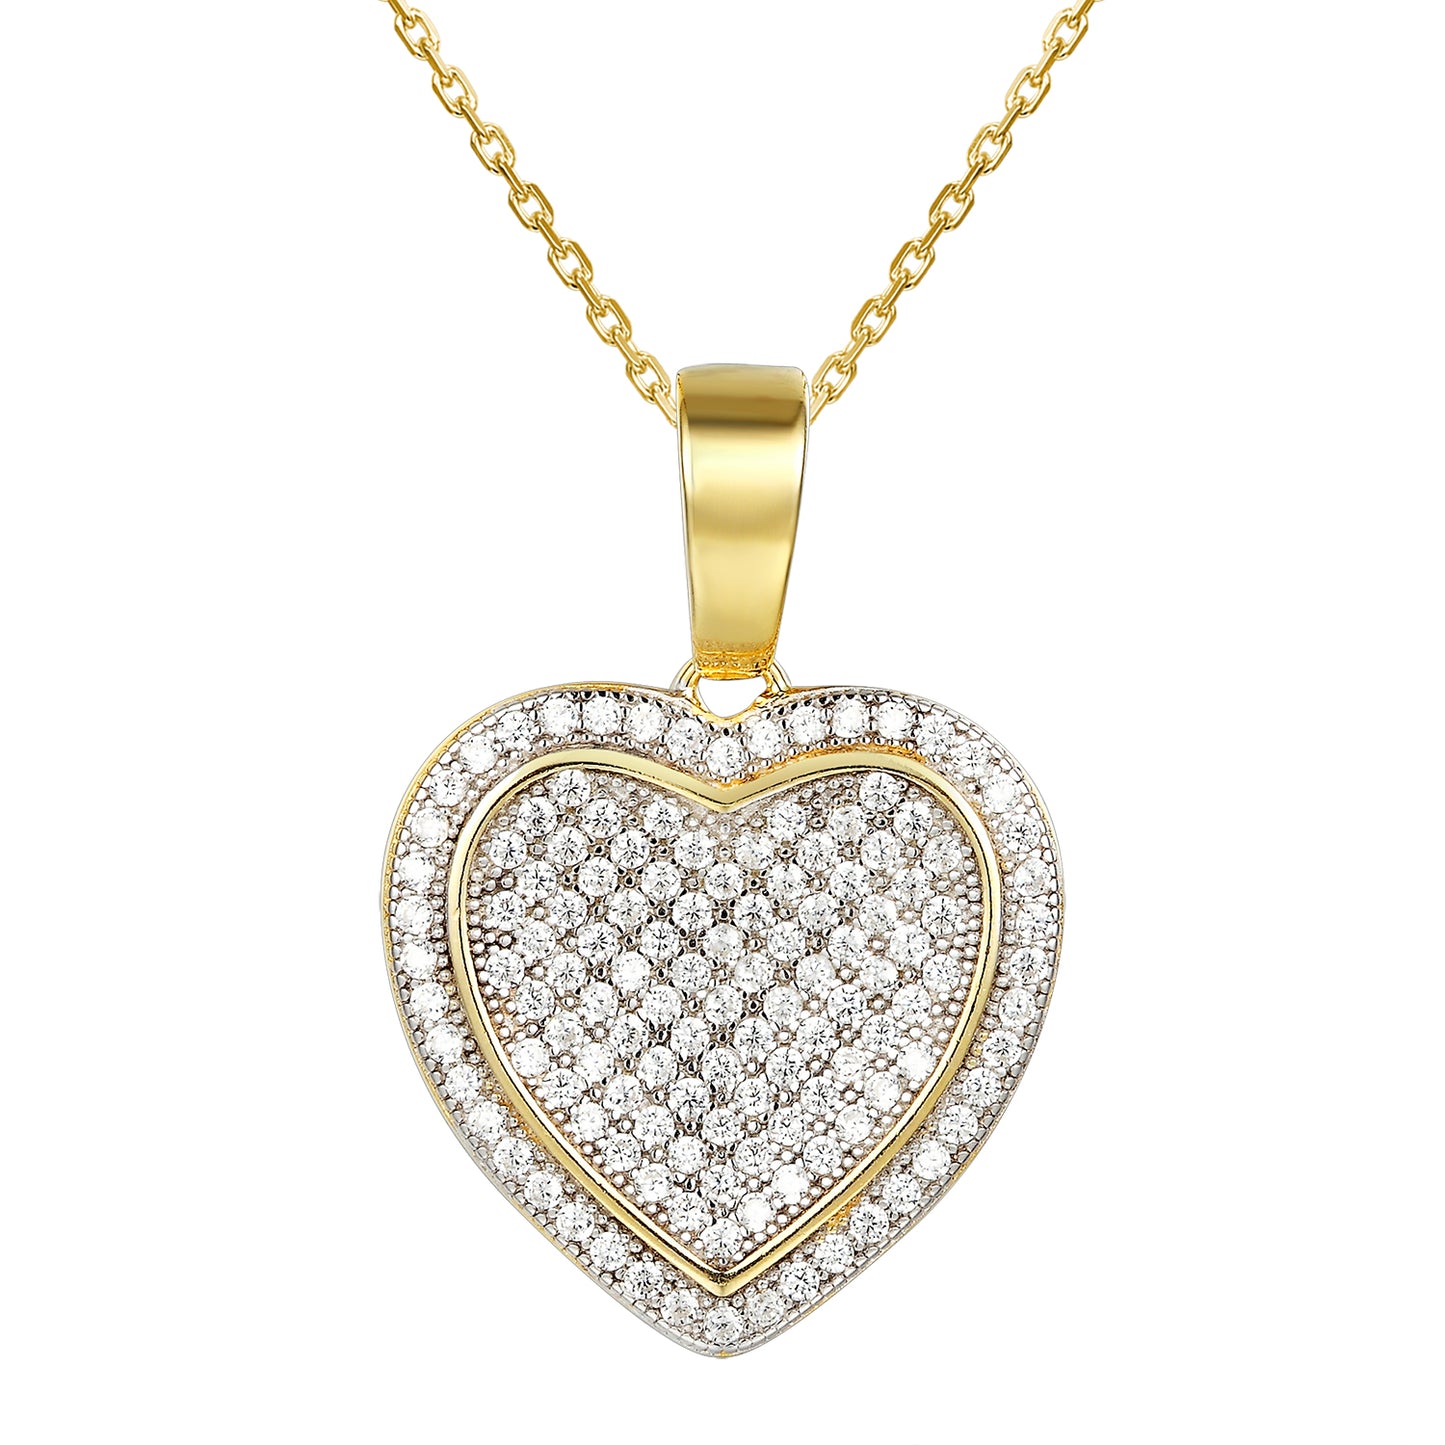 Small Double Heart Love Silver Pendant Valentine's Gift